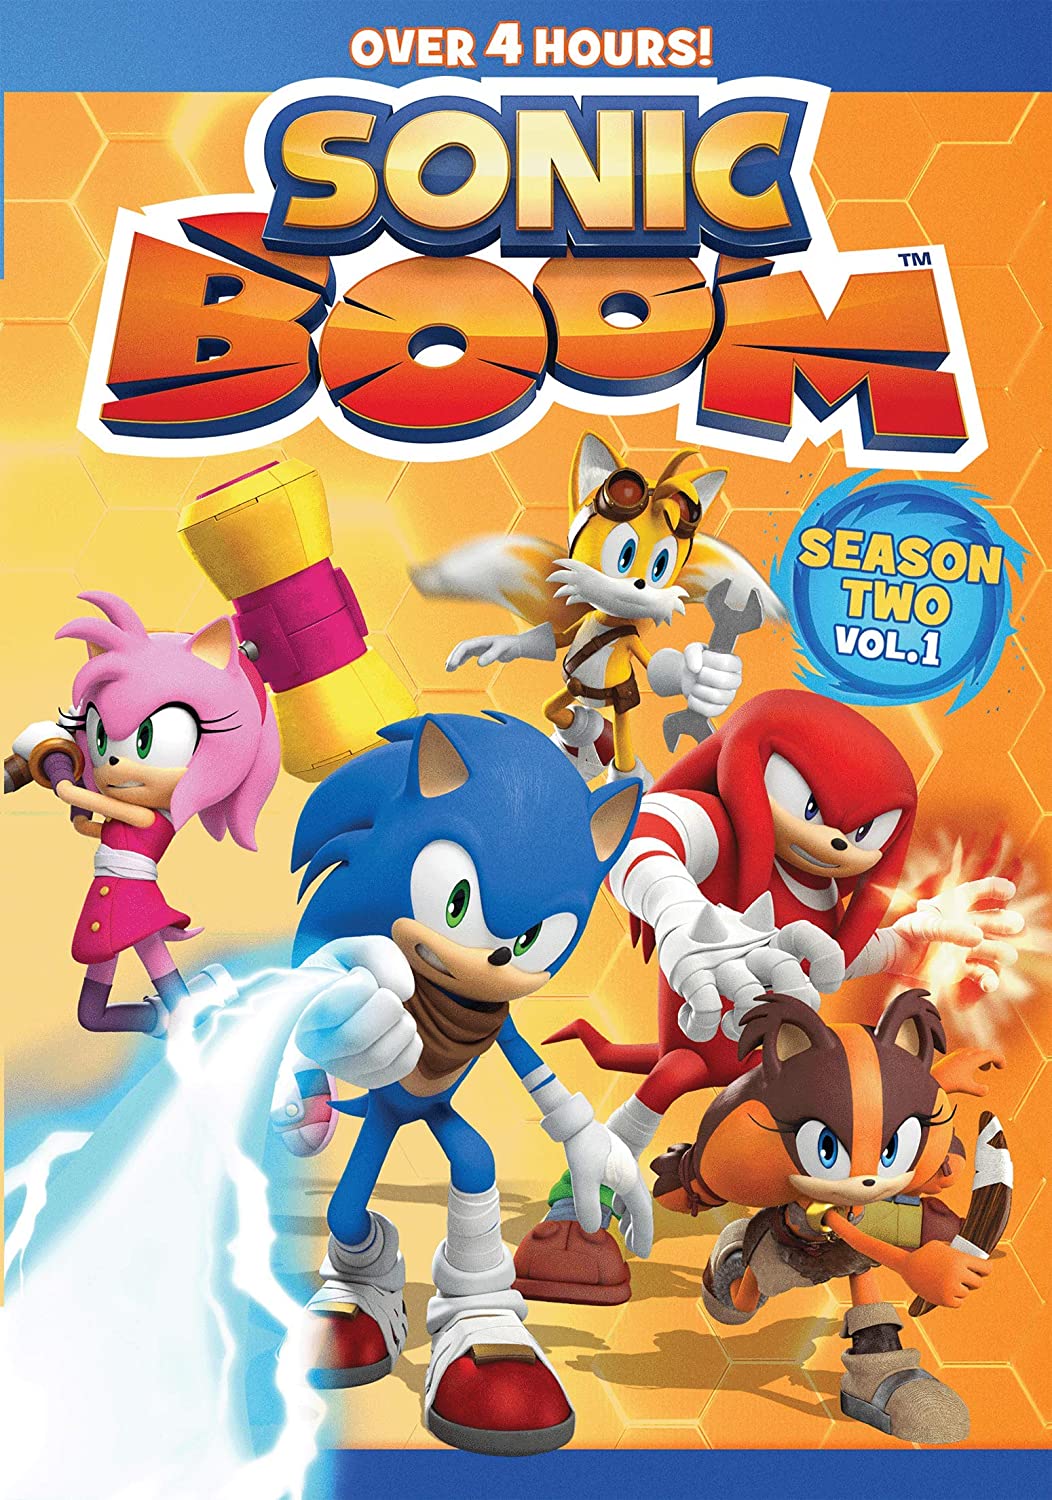 Sonic Boom season two episode 13 Mech Suits Me